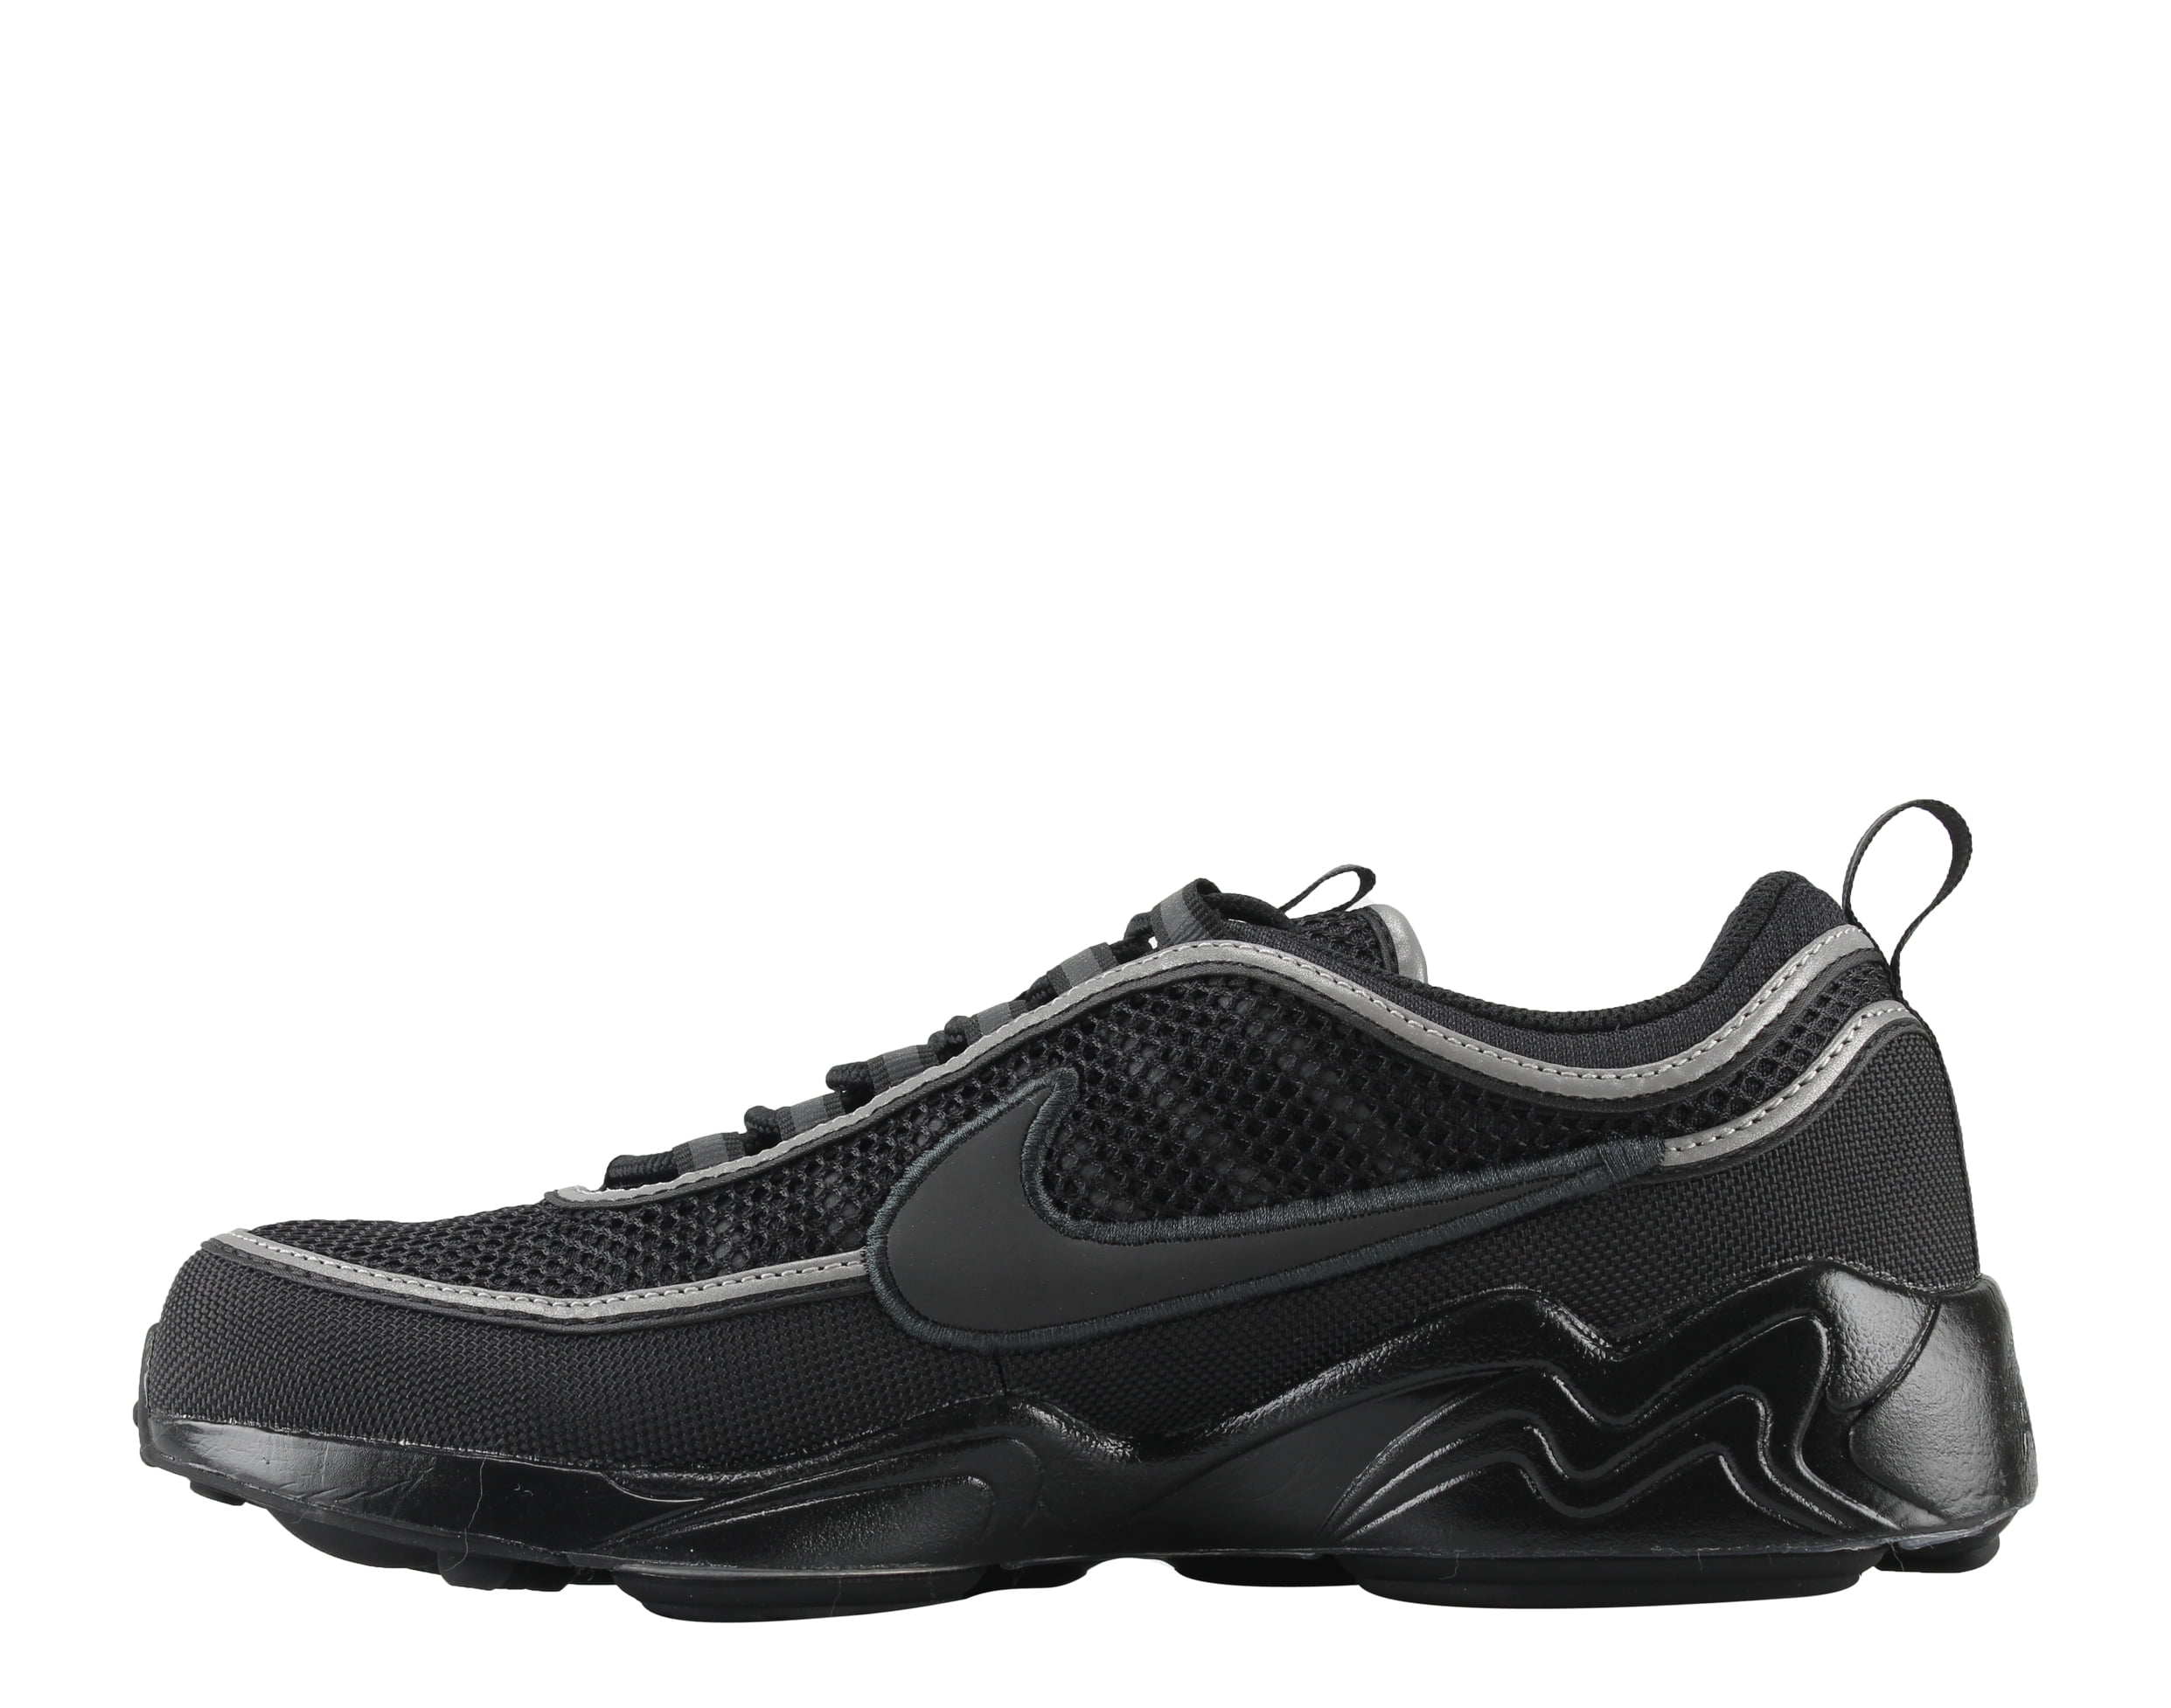 Nike Zoom '16 Black/Black-Anthracite 926955-001 Size 10 - Walmart.com